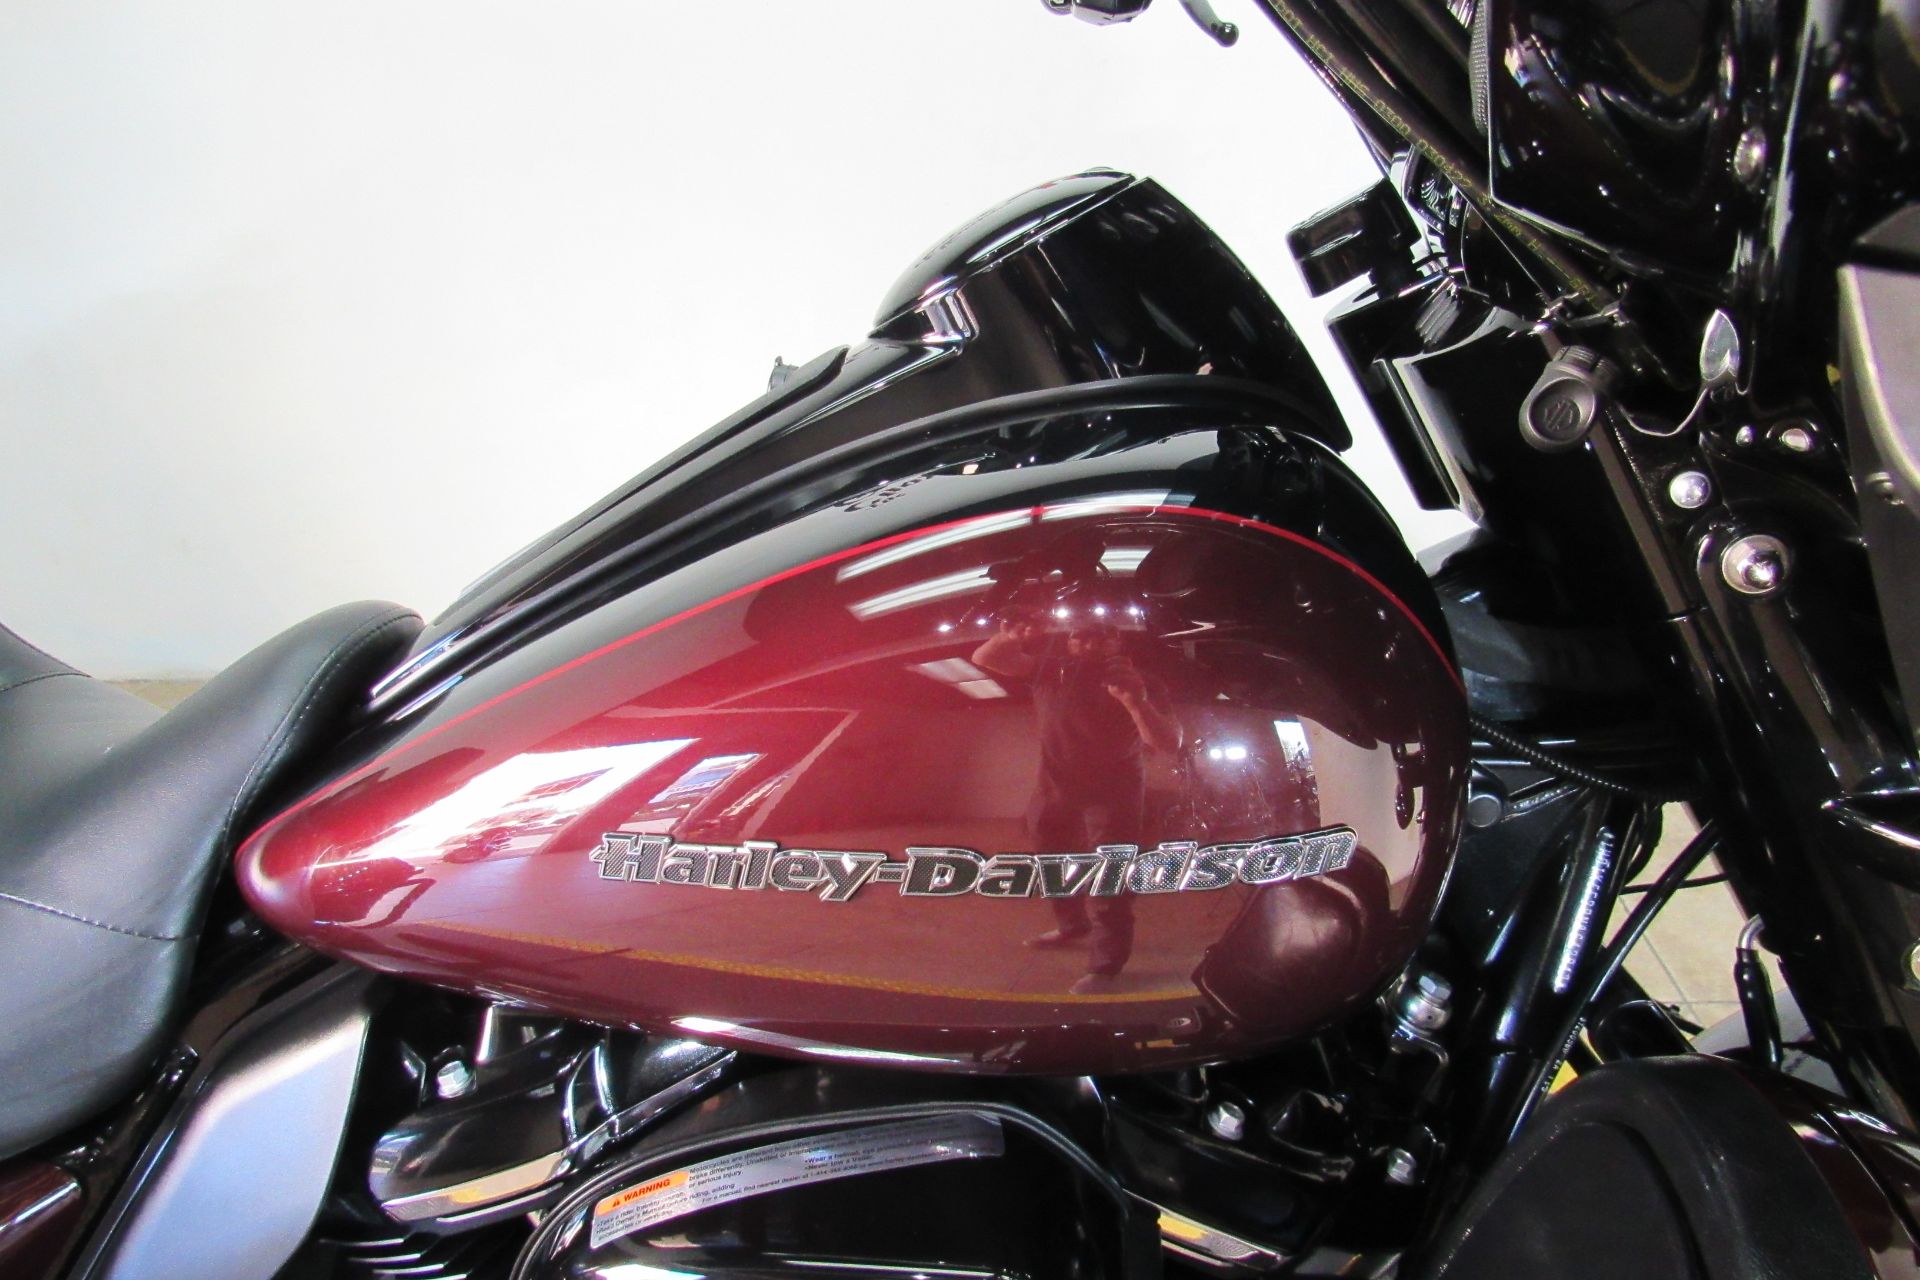 2022 Harley-Davidson Ultra Limited in Temecula, California - Photo 11